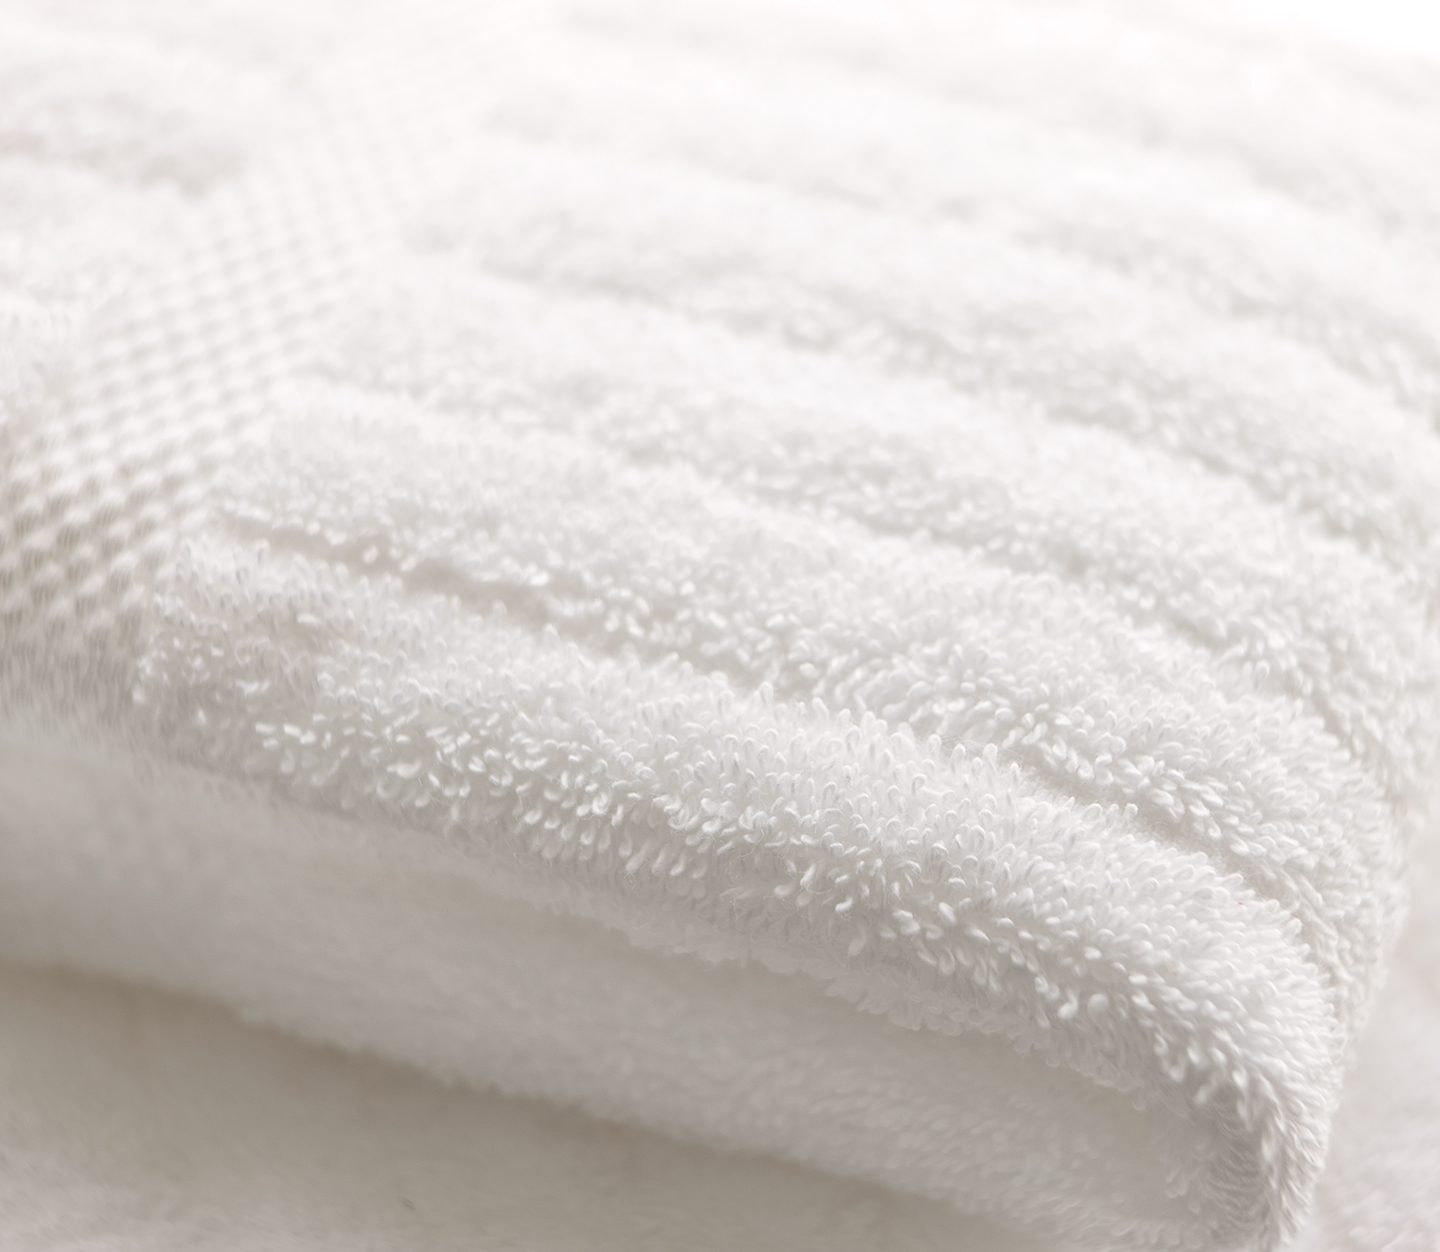 Linen bath sheet, Stonewashed linen bath towels, Thick striped linen towel